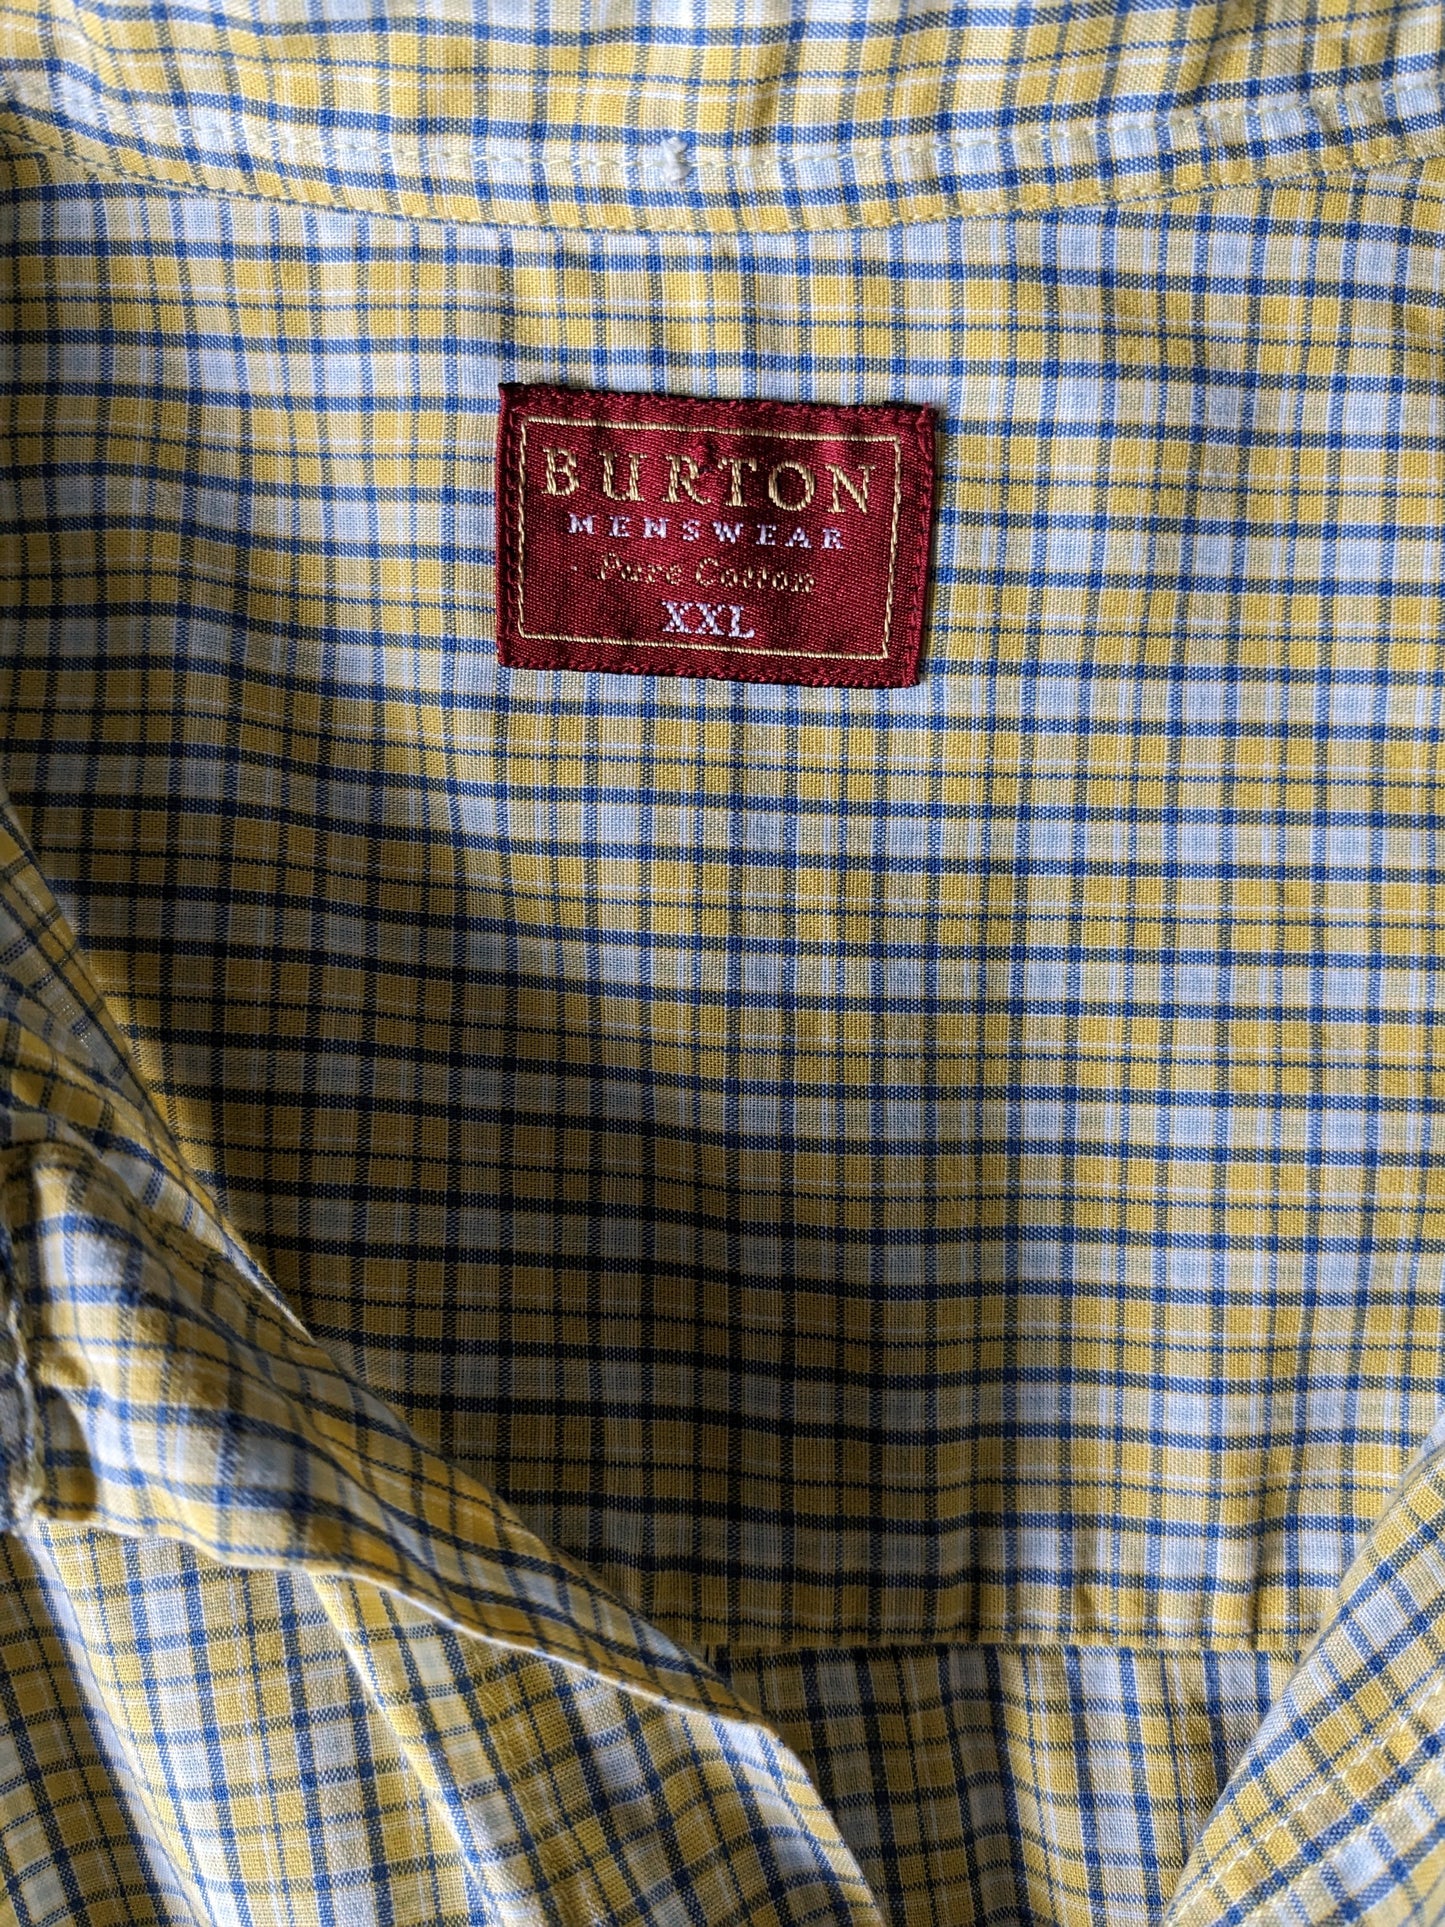 Burton Menswear overhemd korte mouw. Geel Blauw Wit geruit. Maat XXL / 2XL.